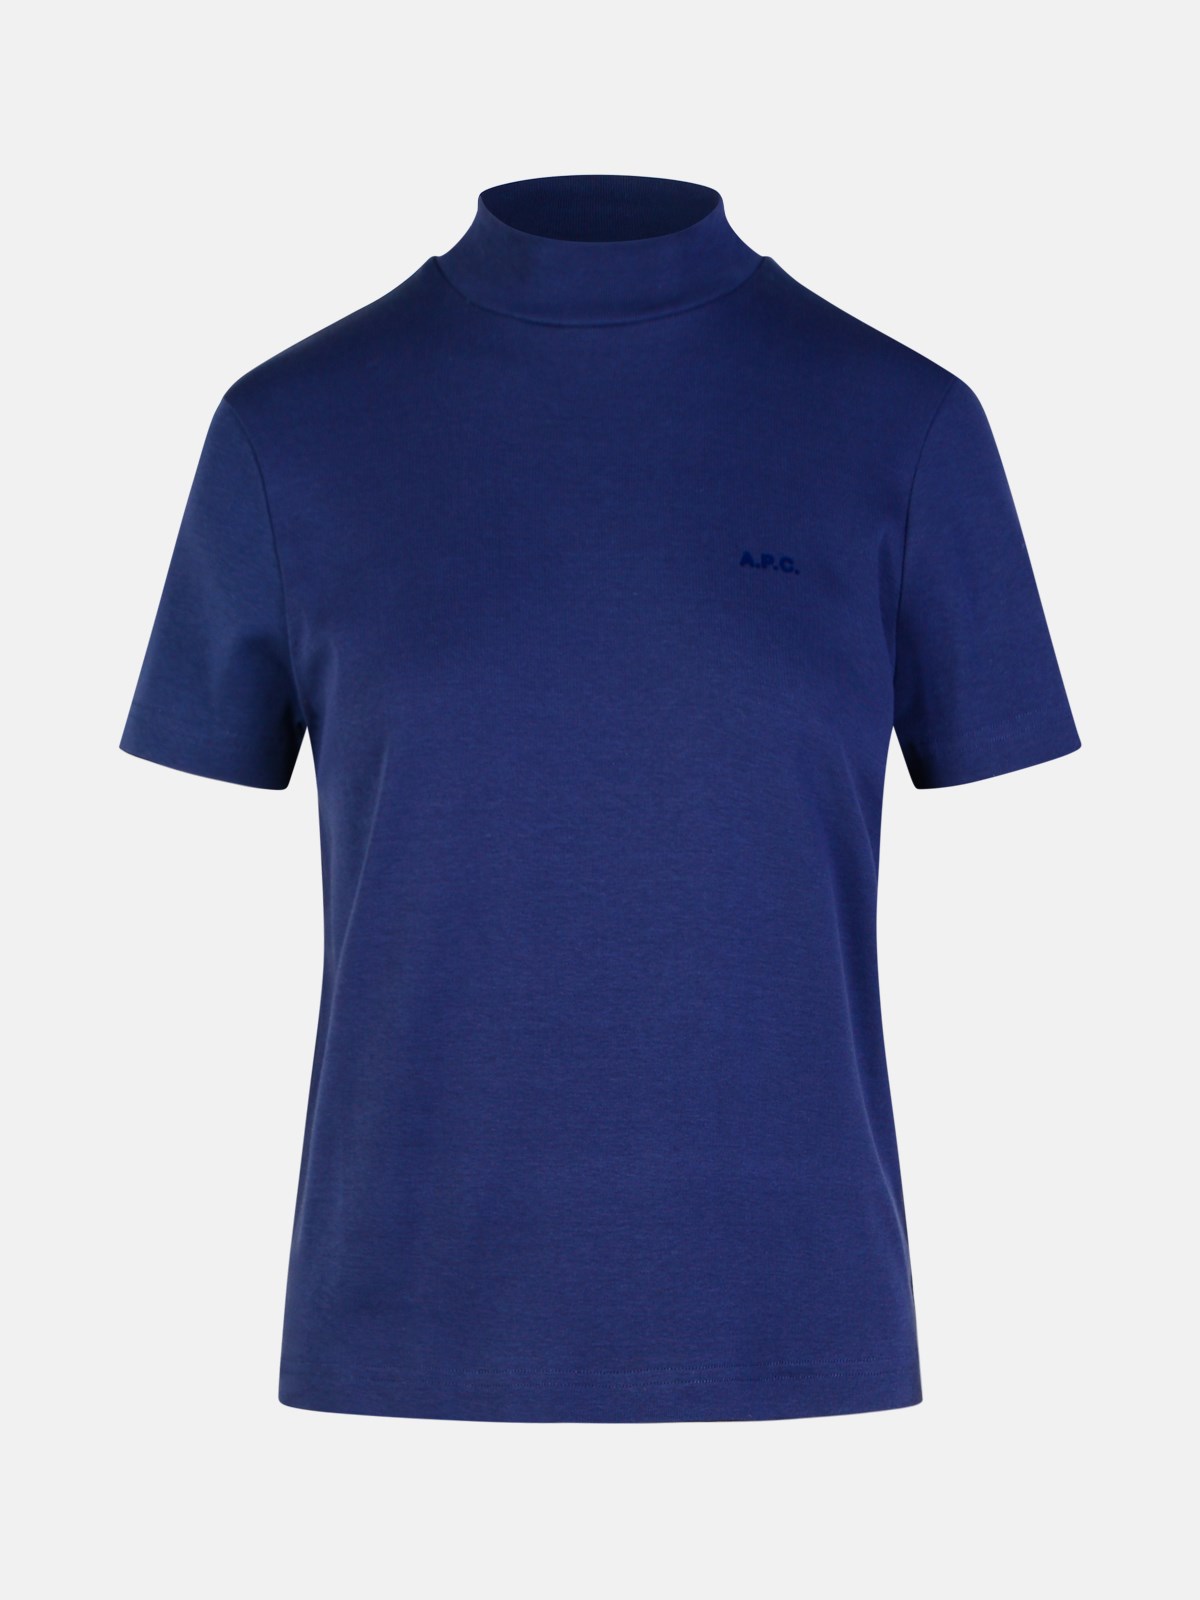 Apc 'caroll' Navy Cotton T-shirt In Blue